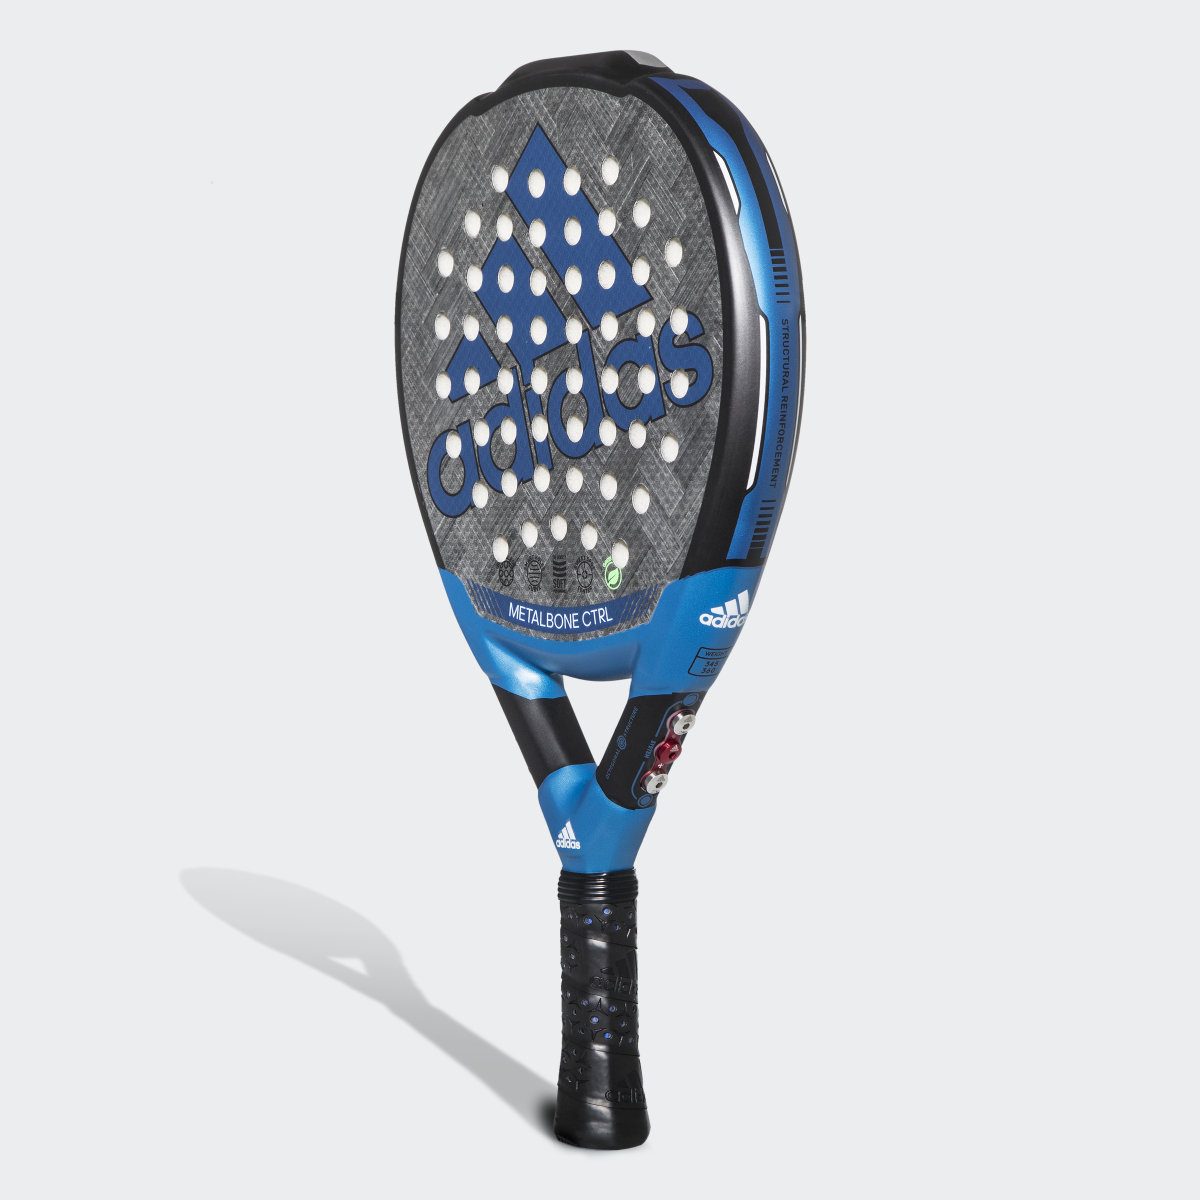 Adidas Metalbone CTRL 3.1 Padel Racquet. 4